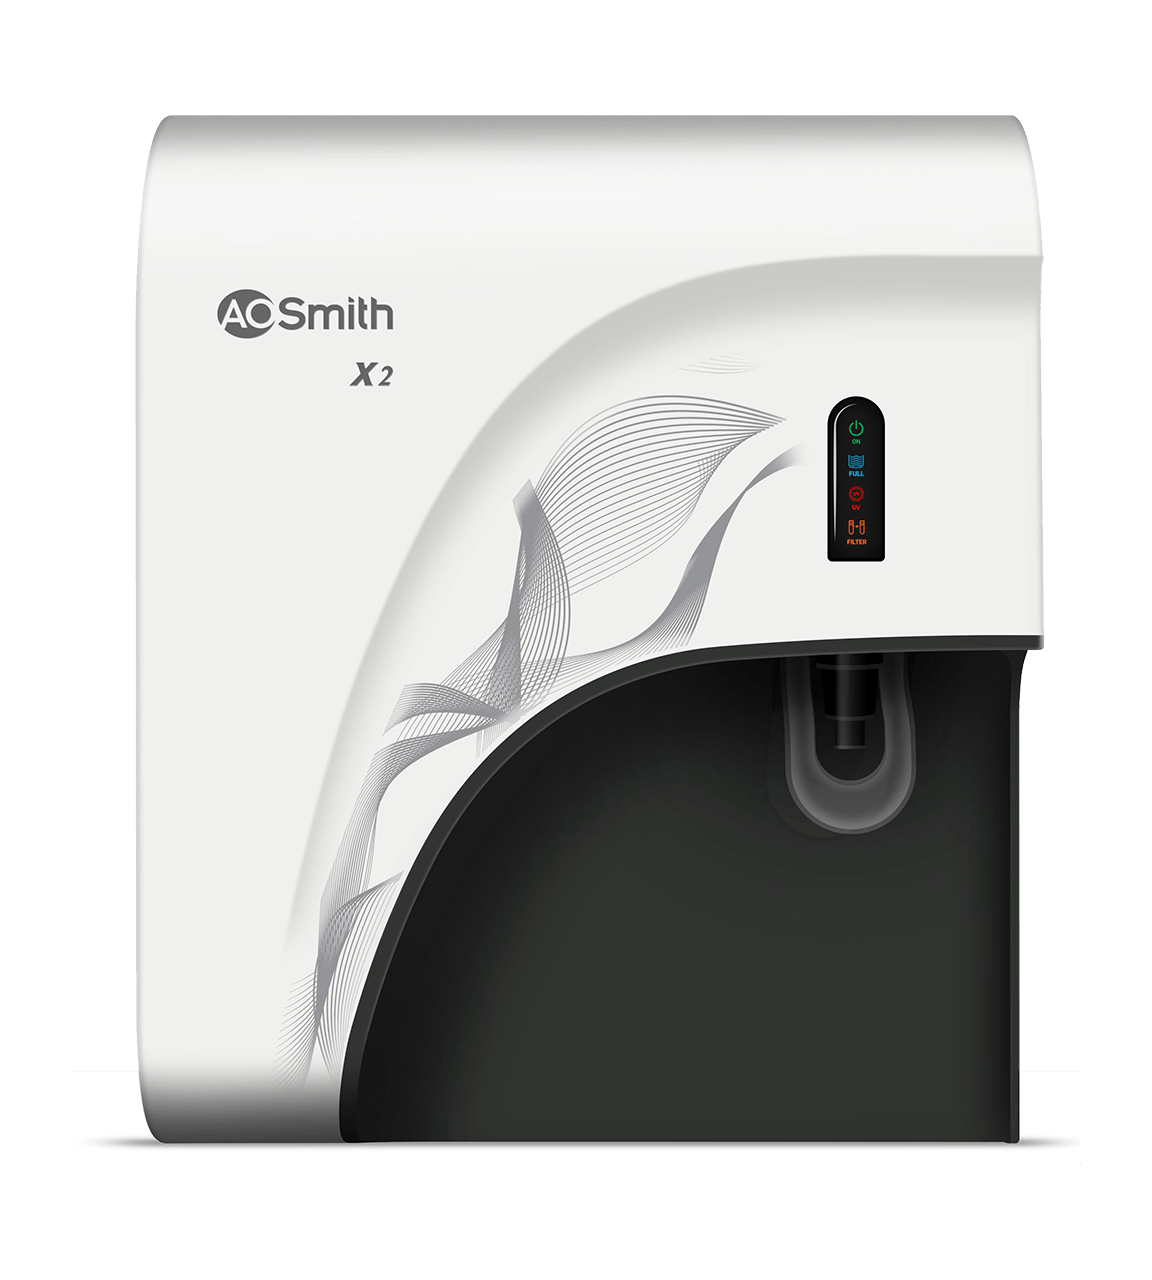 AO Smith - X2 - UV Water Purifier